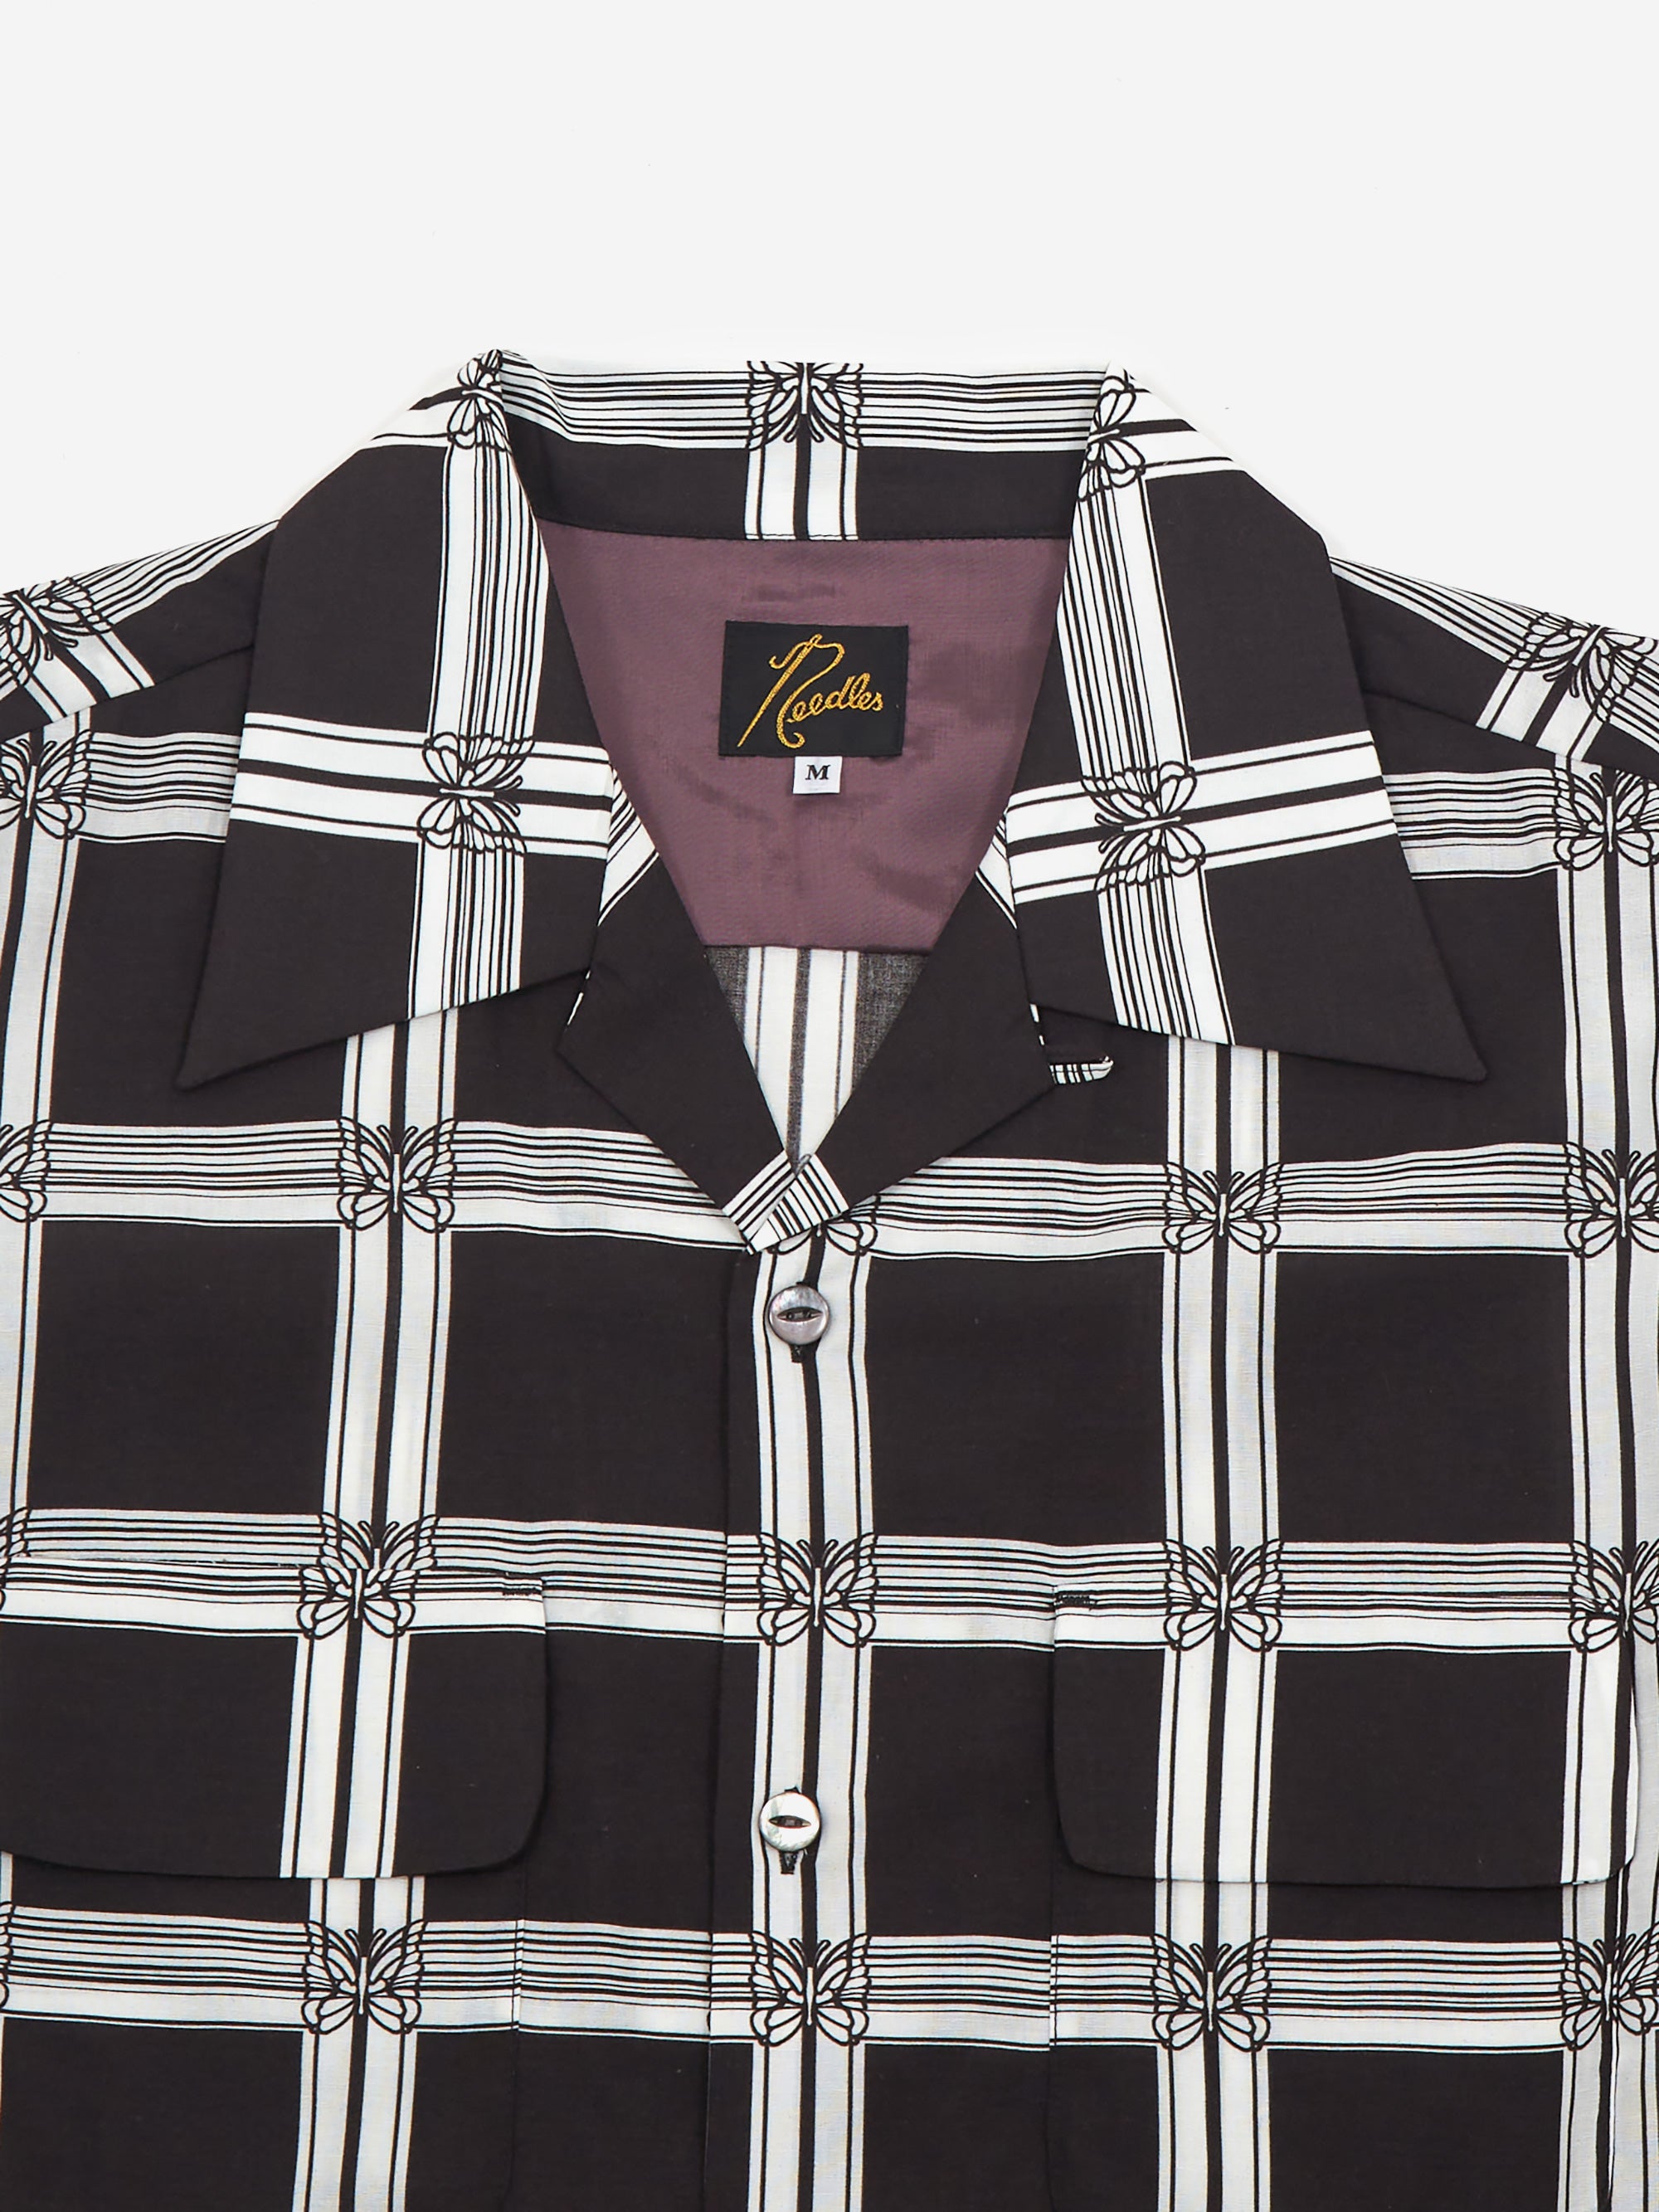 Needles Classic Shirt - R/C Lawn Cloth/Papillon Plaid - Black